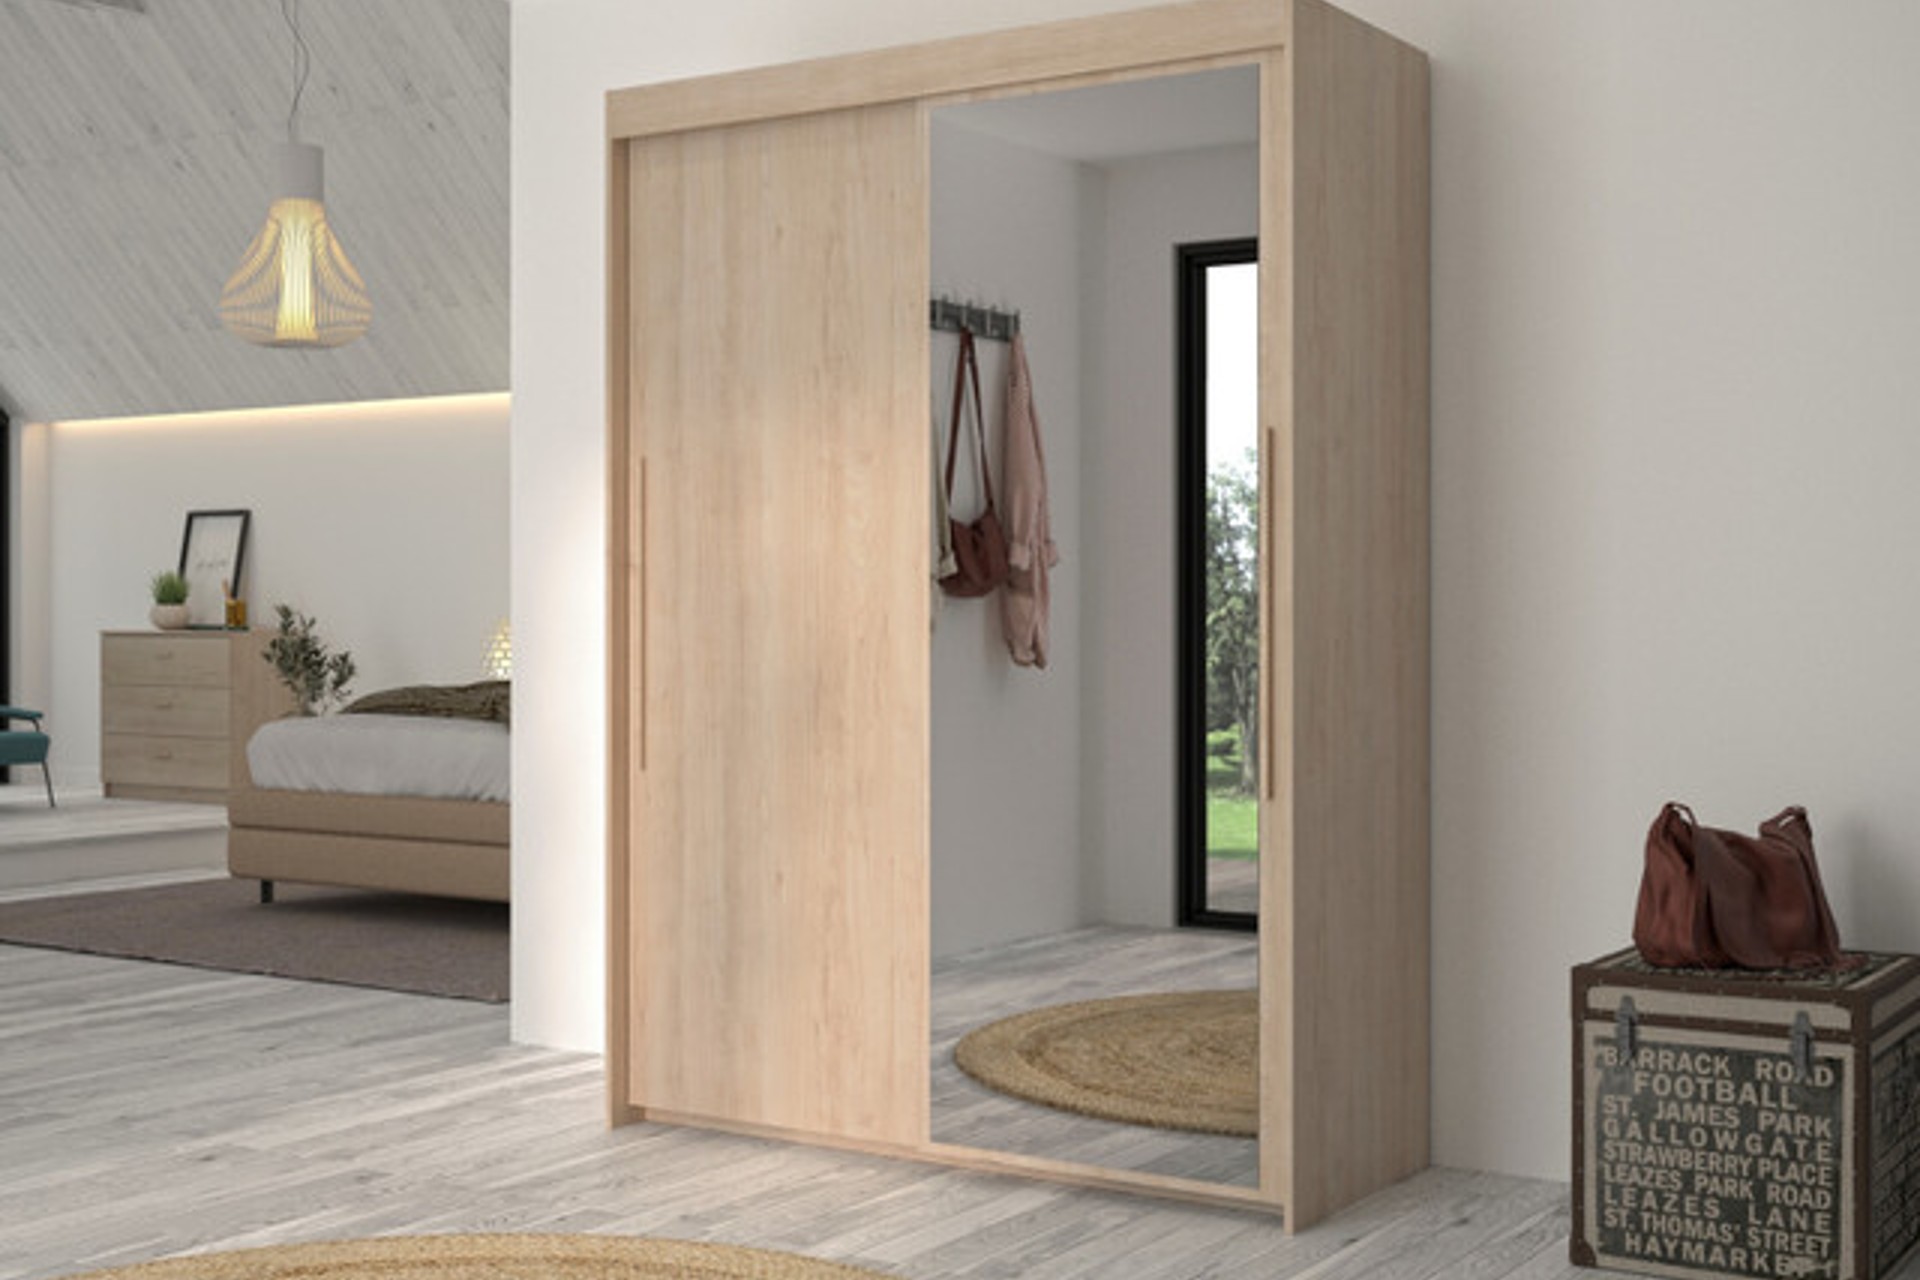 Tulle 2-door sliding mirrored wardrobe in light wood